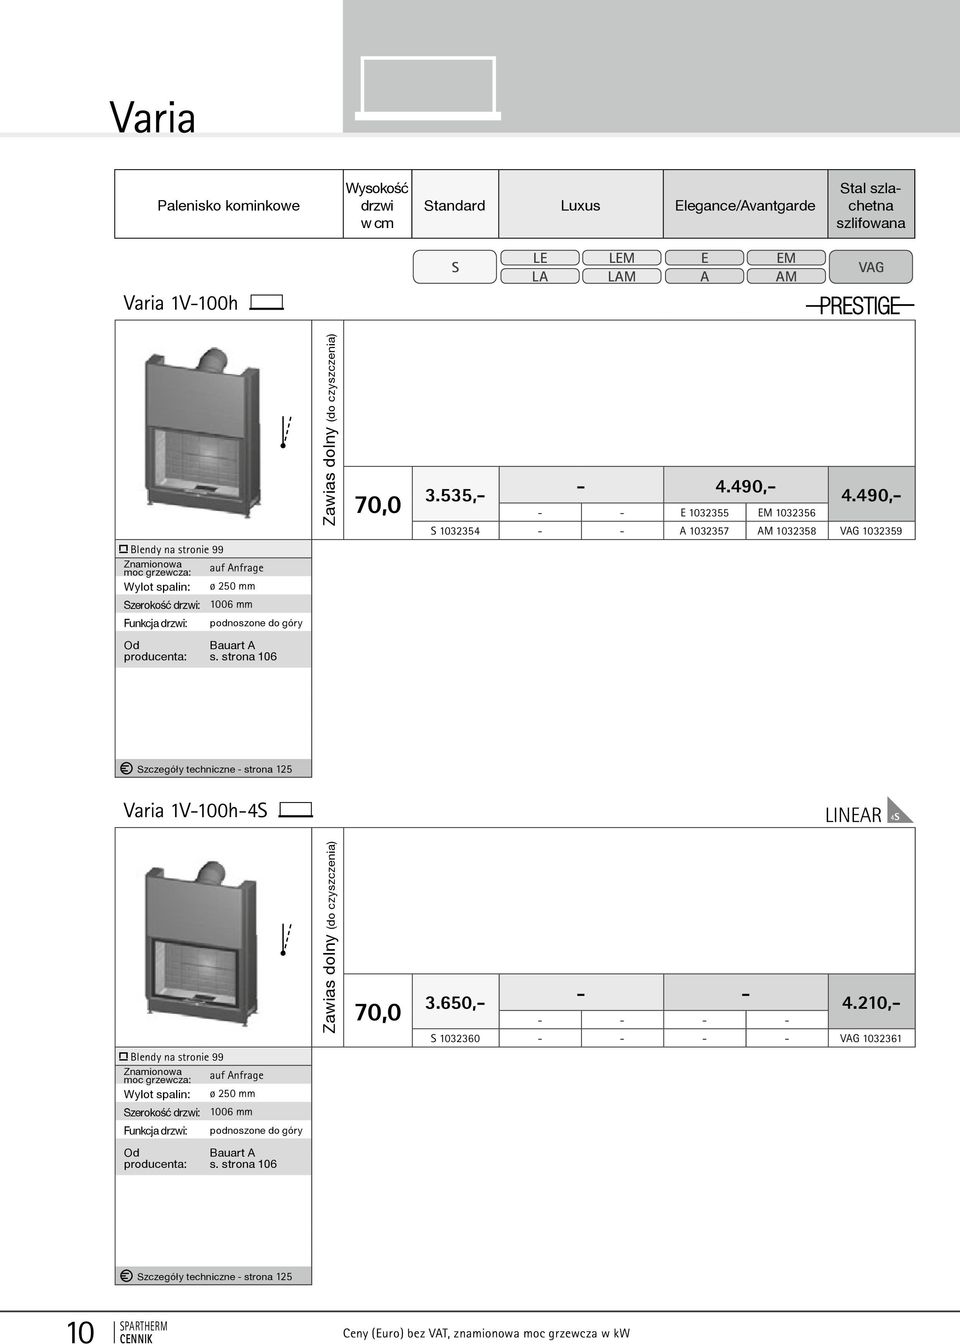 techniczne - strona 125 Varia 1V-100h-4 Blendy na stronie 99 auf nfrage ø 250 mm 1006 mm 70,0